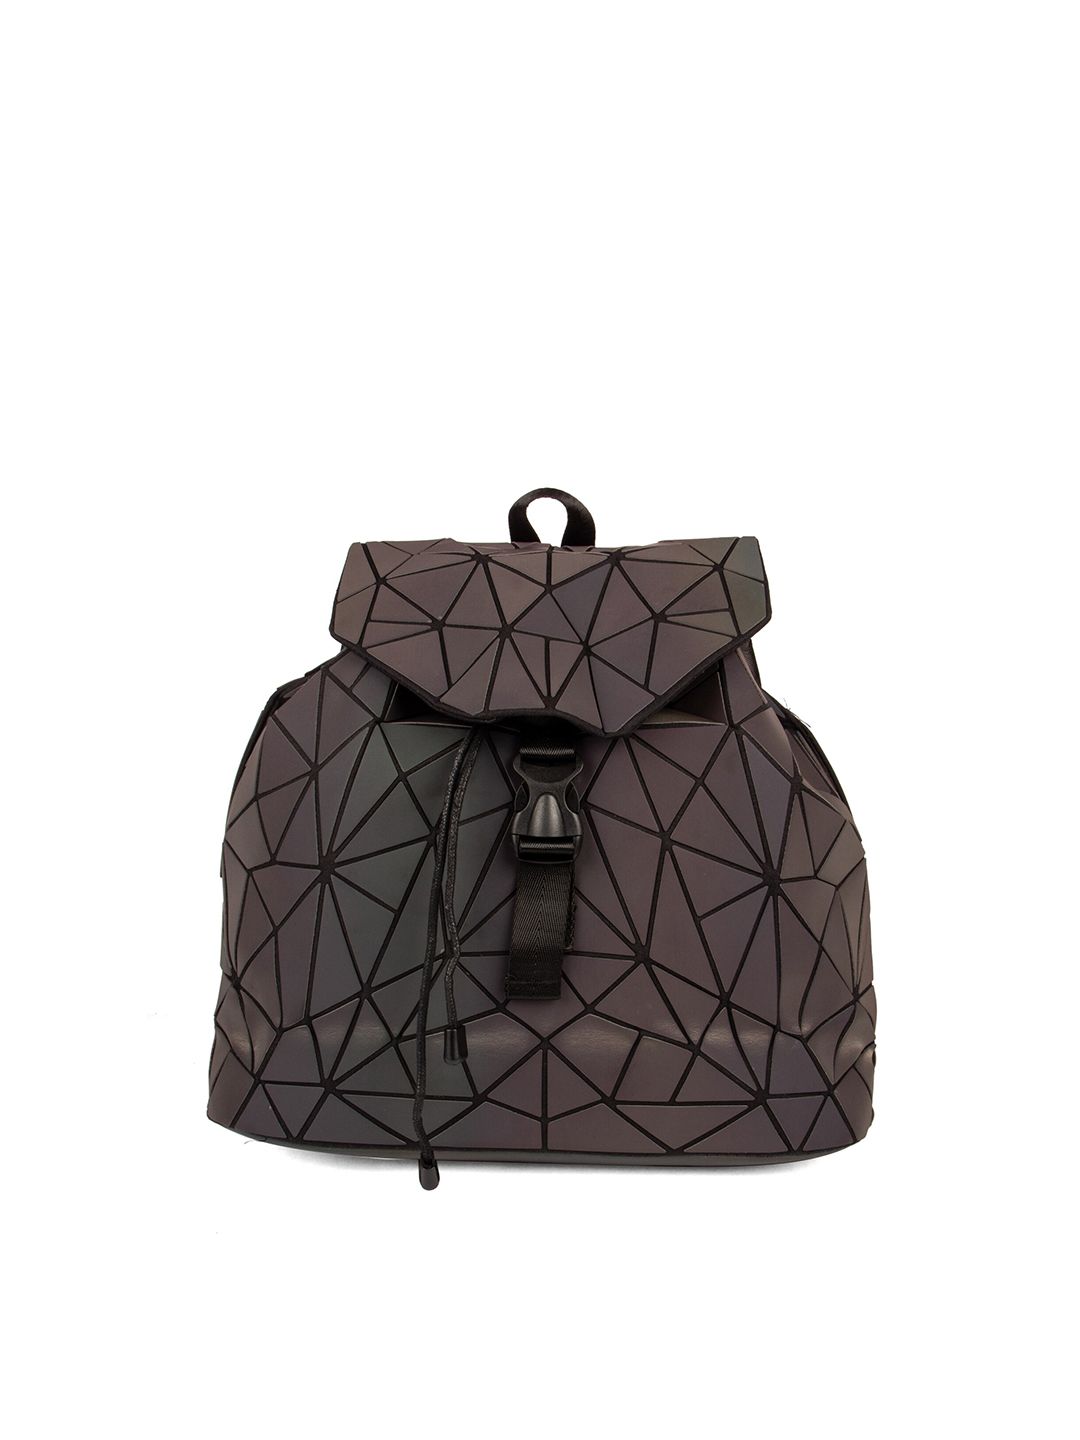 BAOMI Geometric Range Grey Color Soft One Size Handbag Price in India